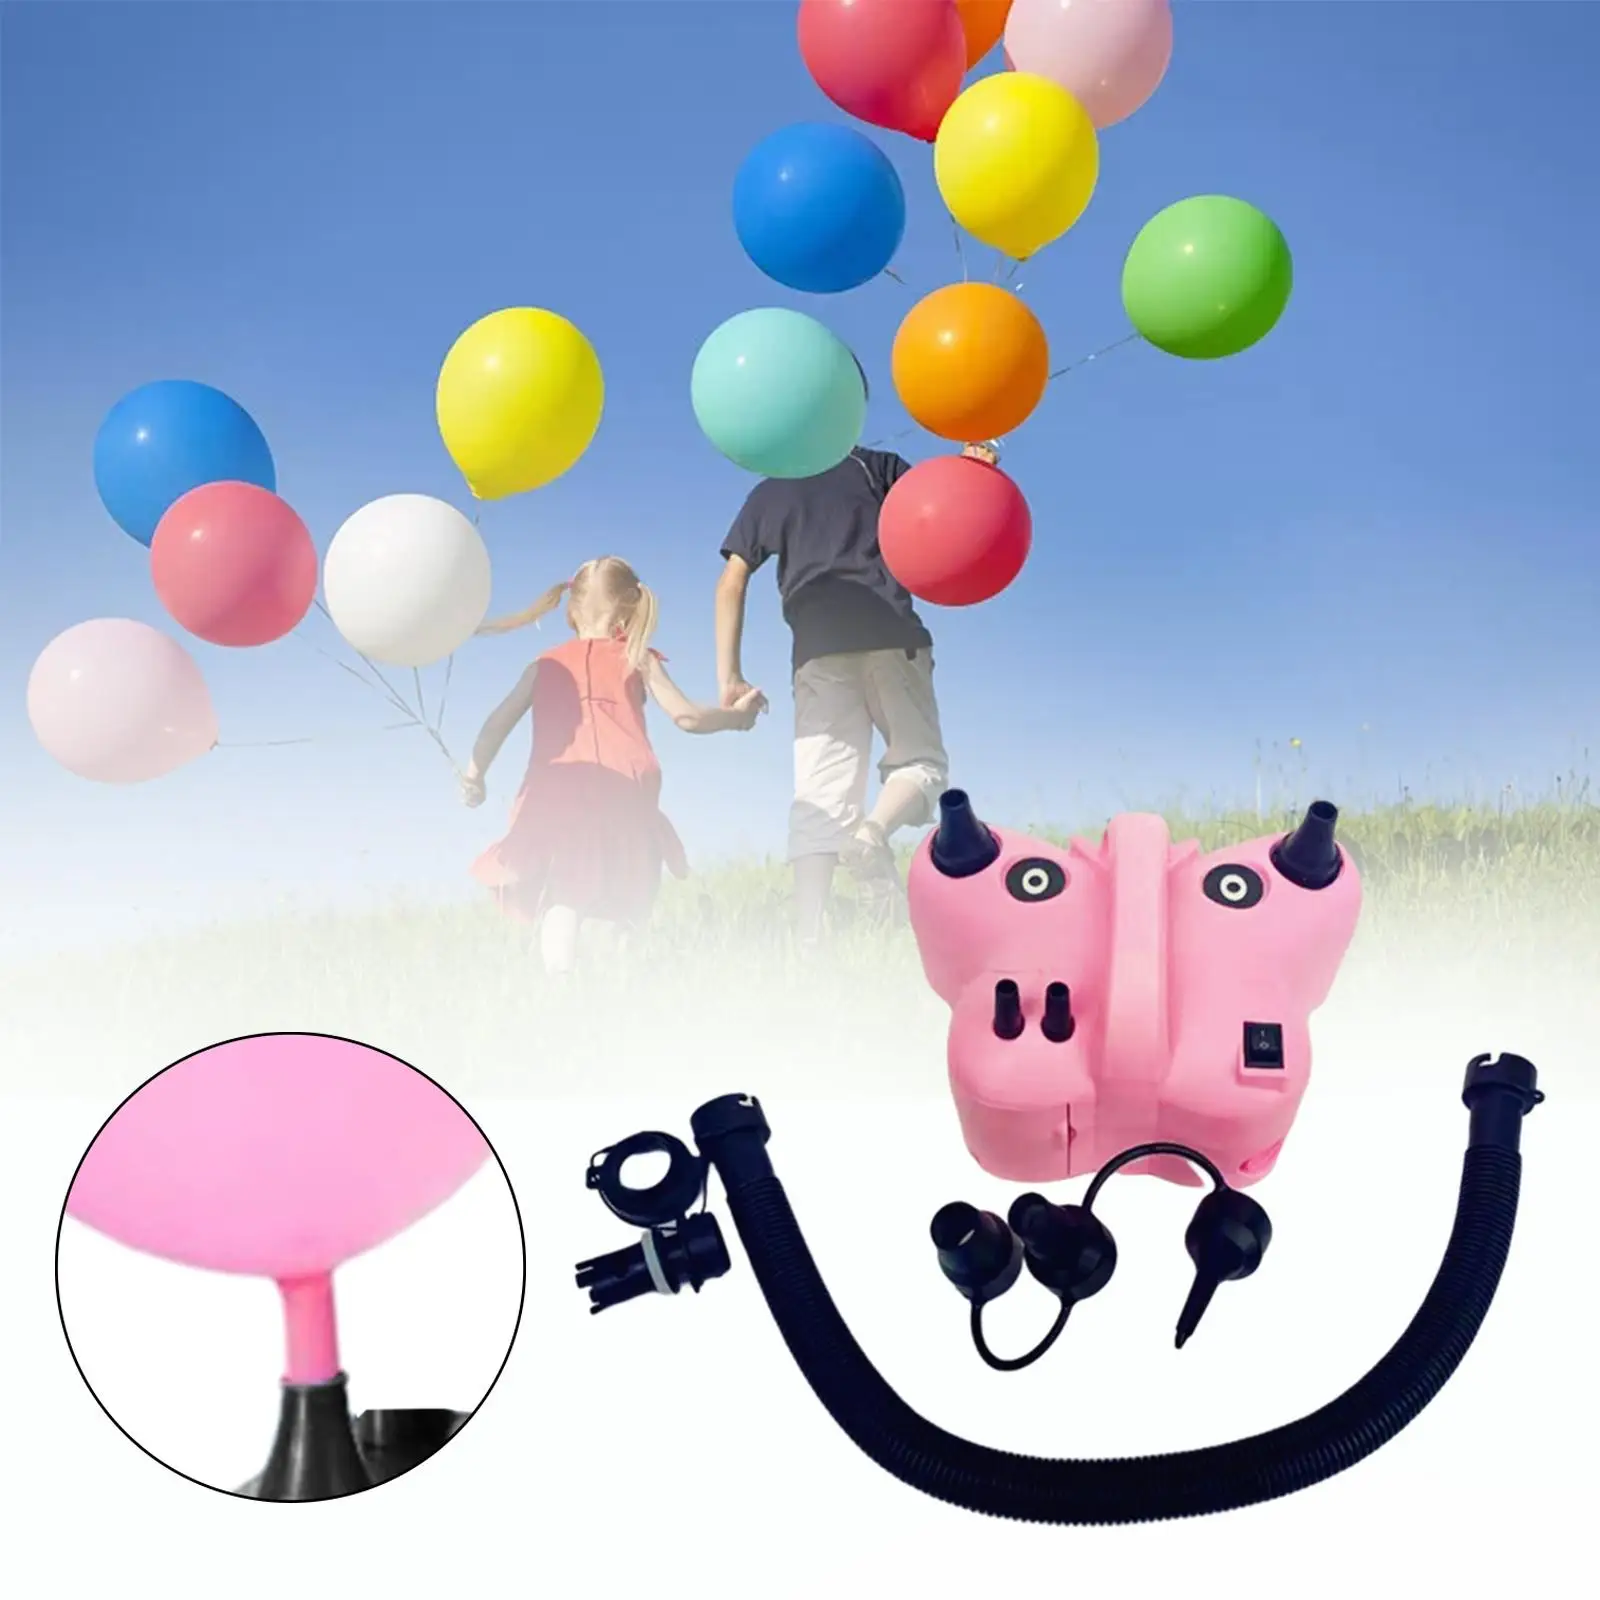 Electric Balloon Inflator for Ballon Arch Garland Air Mattress Yoga Ball